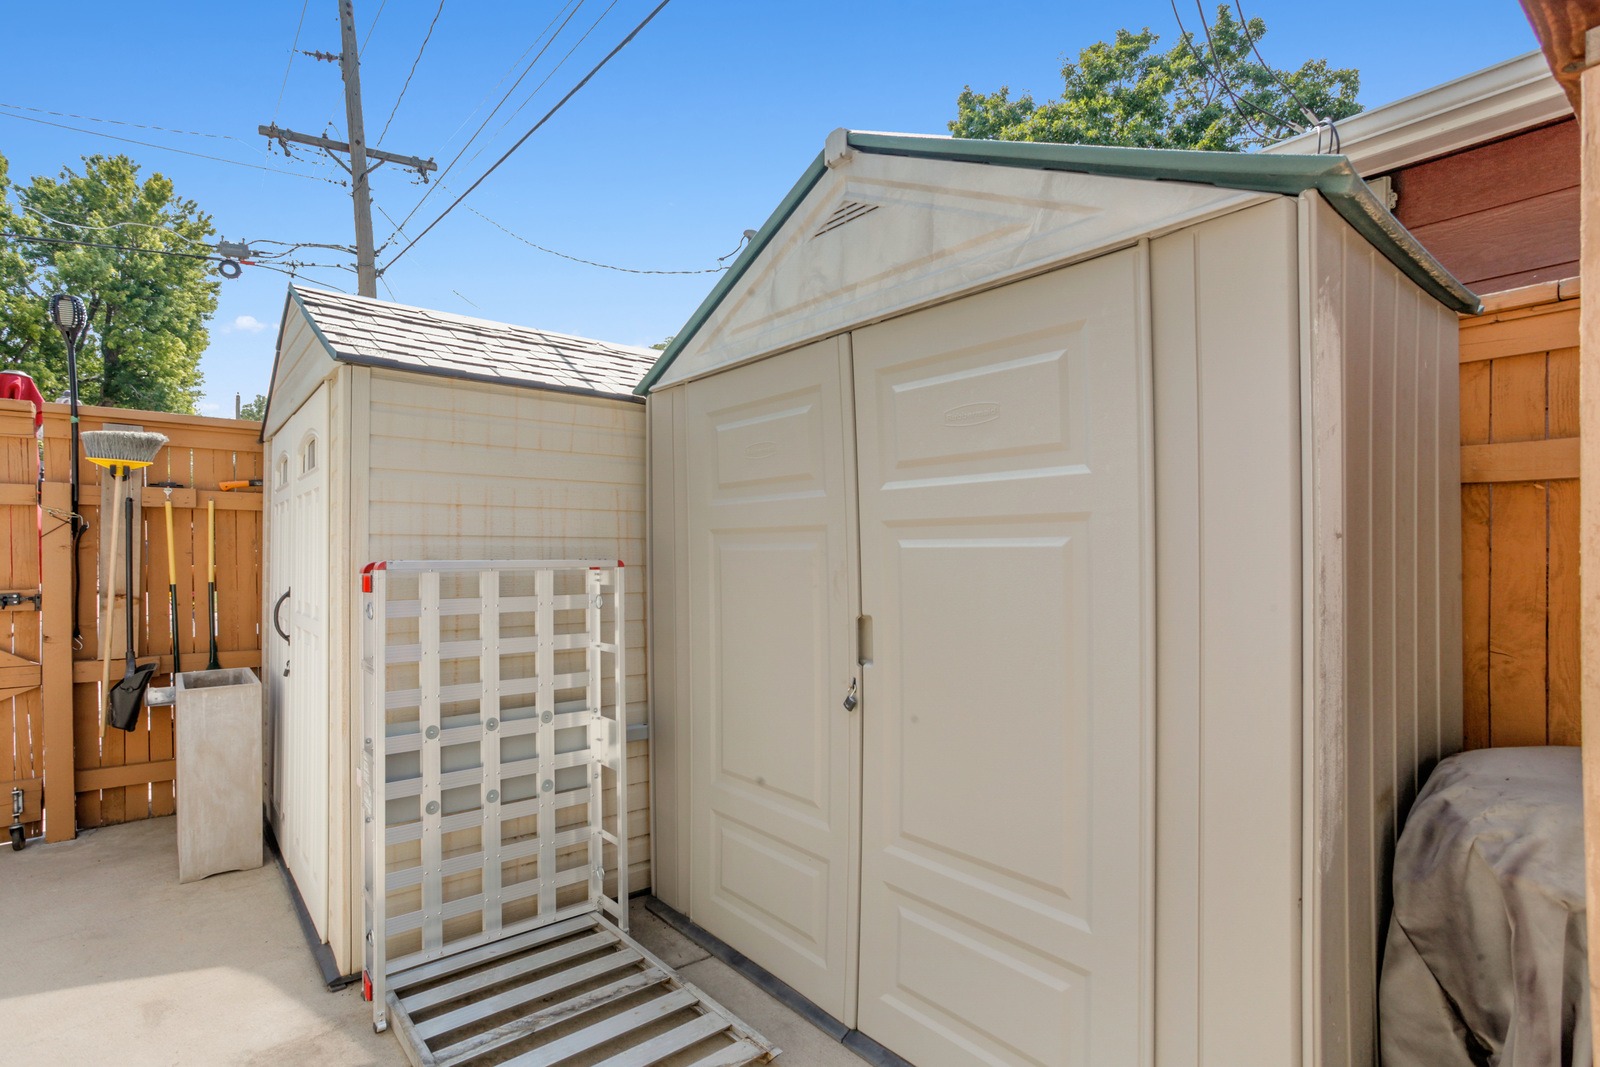 Great outdoor storage for yardwork